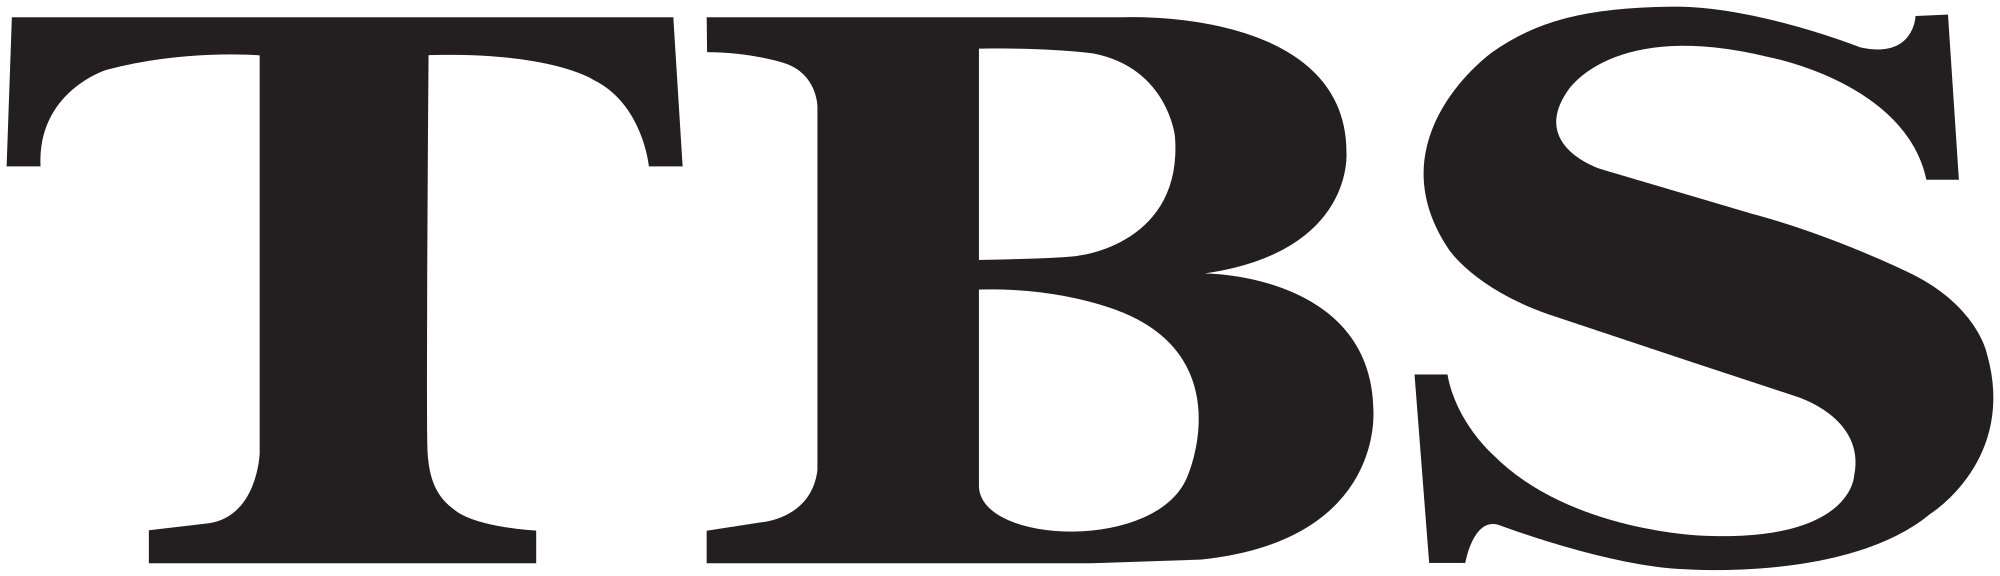 TBS Logo - File:TBS logo.svg - Wikimedia Commons